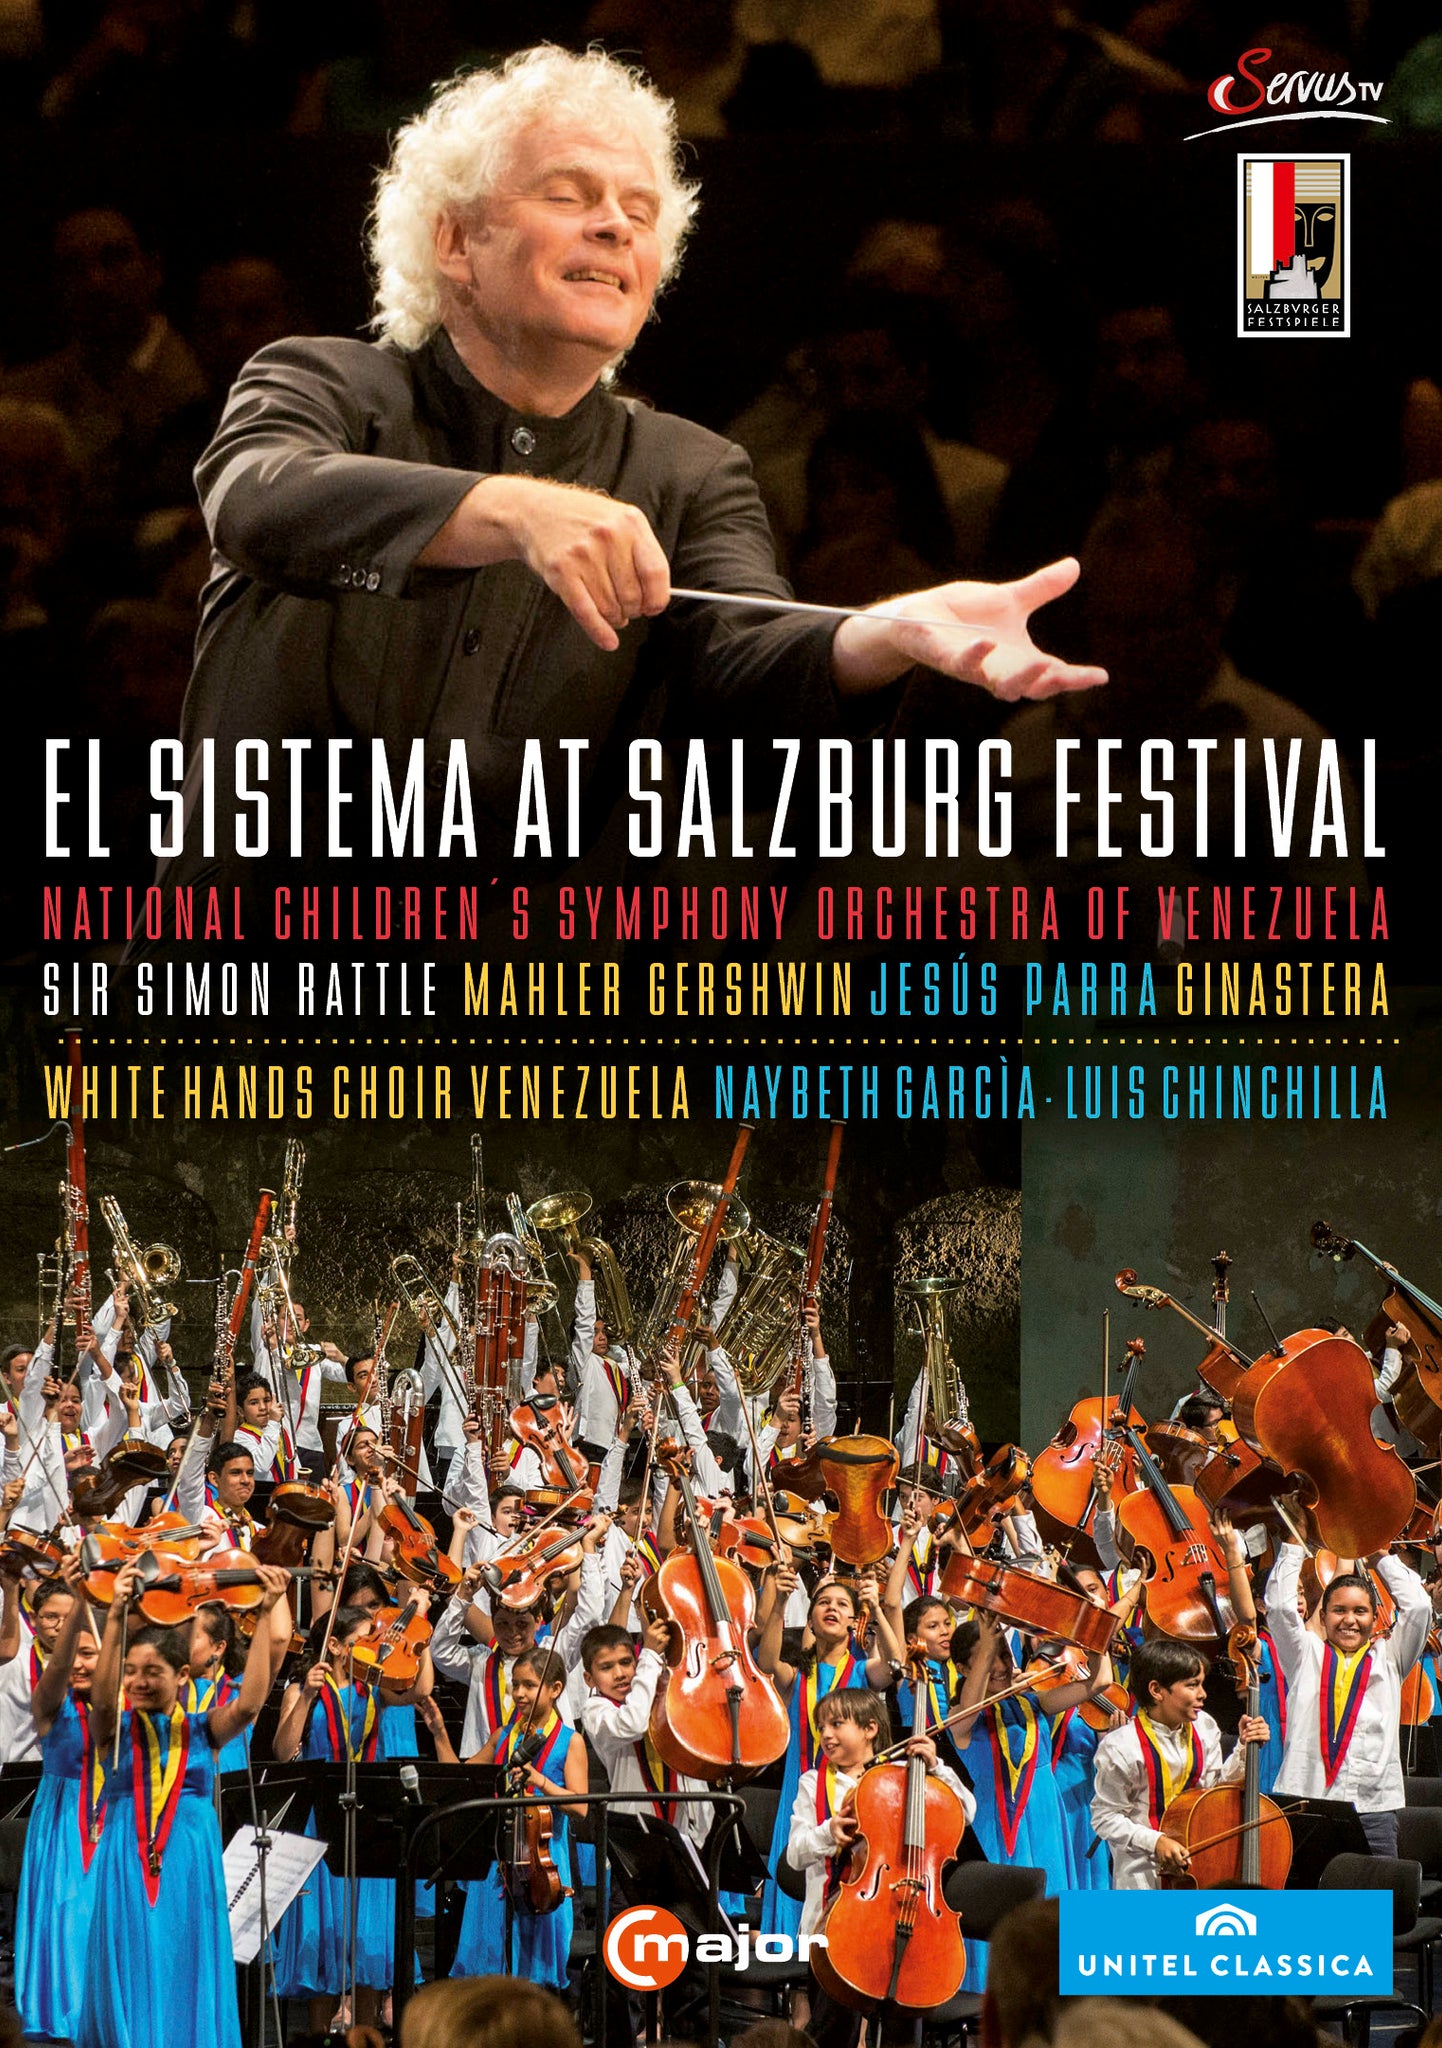 El Sistema at Salzburg Festival / Rattle, National Children's Symphony Orchestra of Venezuela